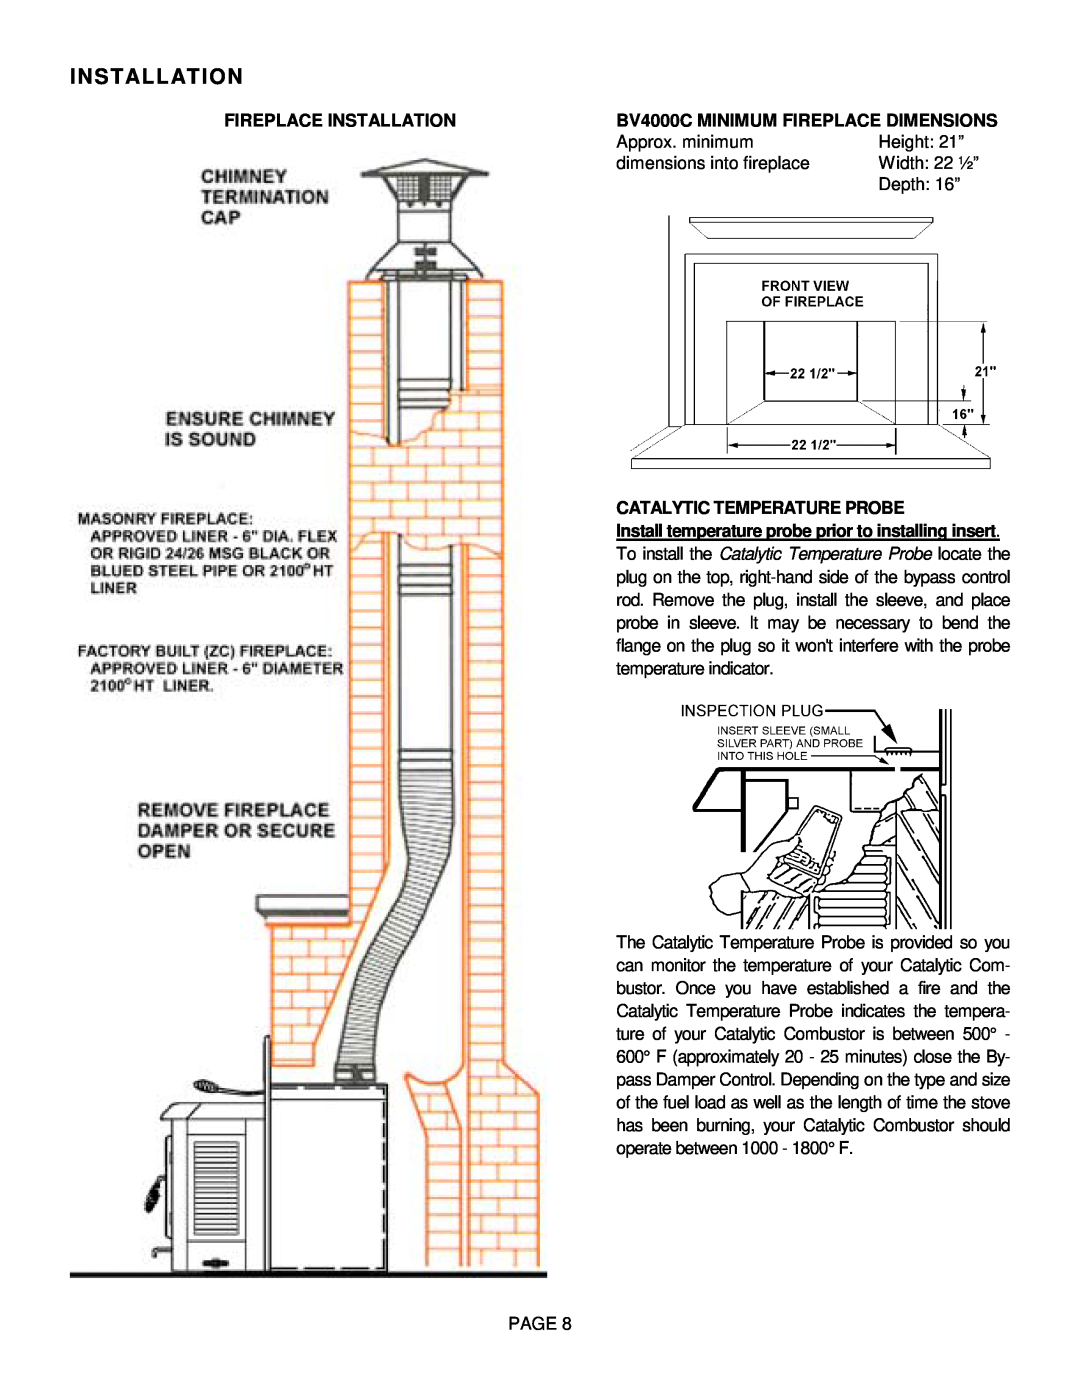 Lennox International Inc Fireplace Installation, BV4000C MINIMUM FIREPLACE DIMENSIONS, Catalytic Temperature Probe 